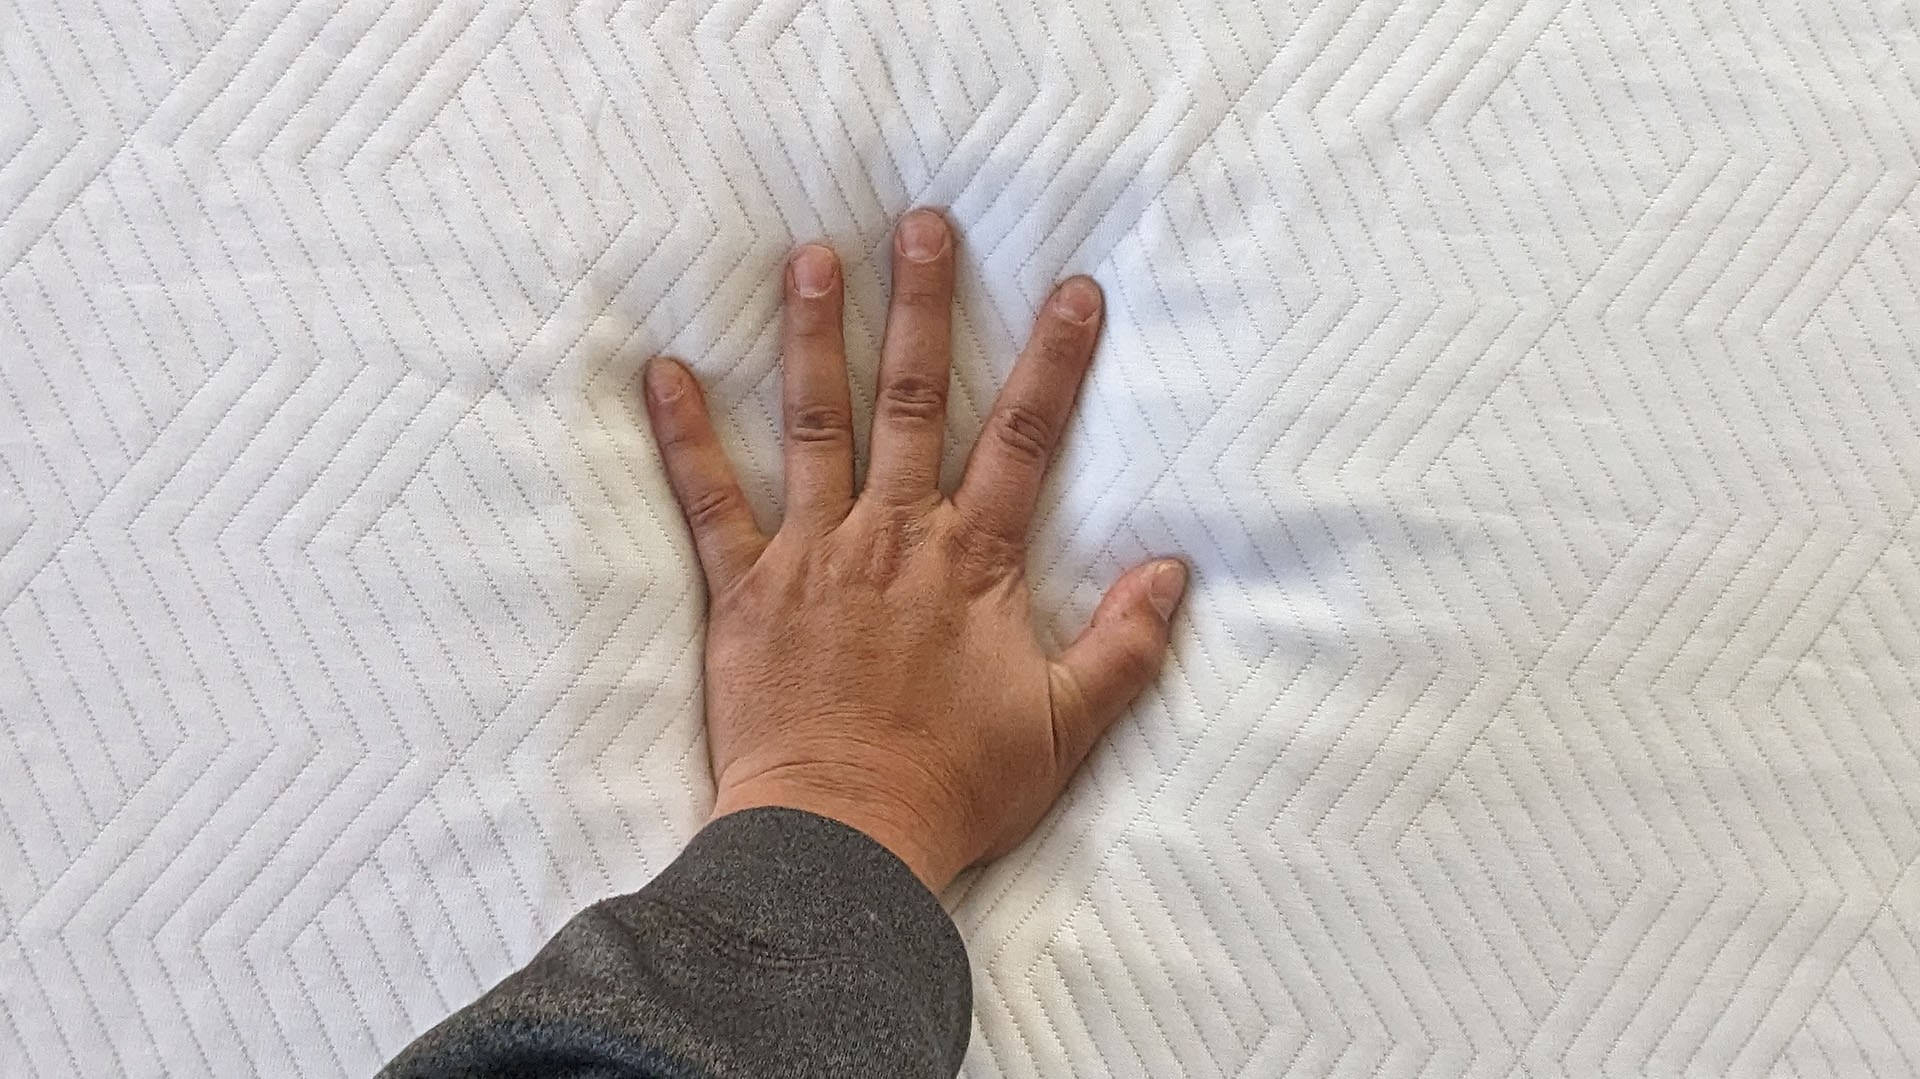 Reviewer's hand resting on Purple NewDay mattress